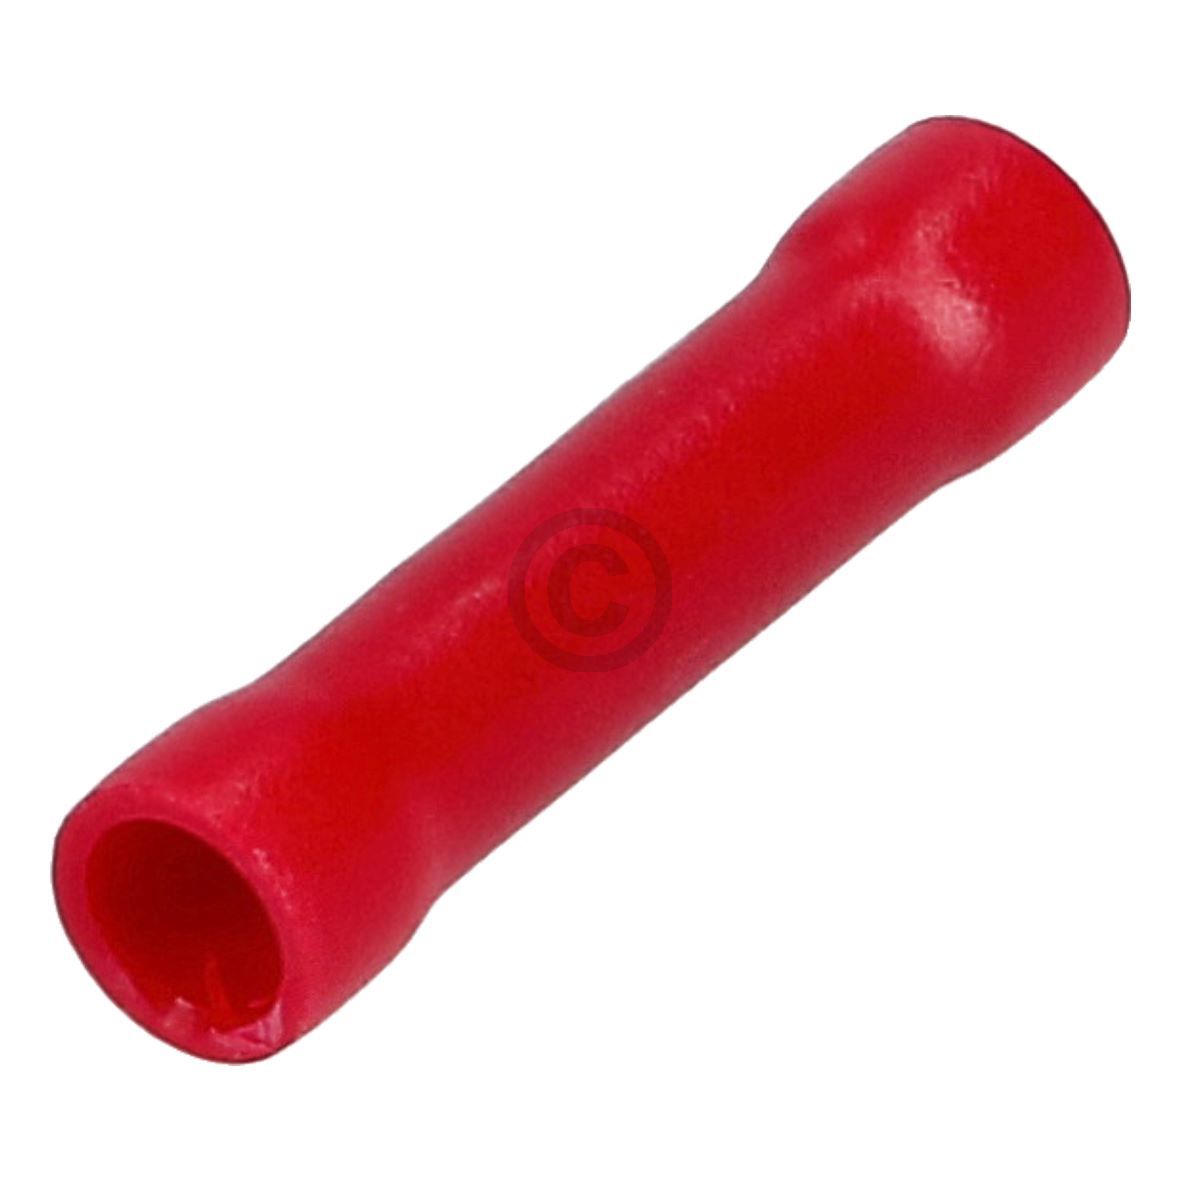 Stoßverbinder Set rot 4mm für 0,5mm - 1,0mm² Aderquerschnitt 100Stk